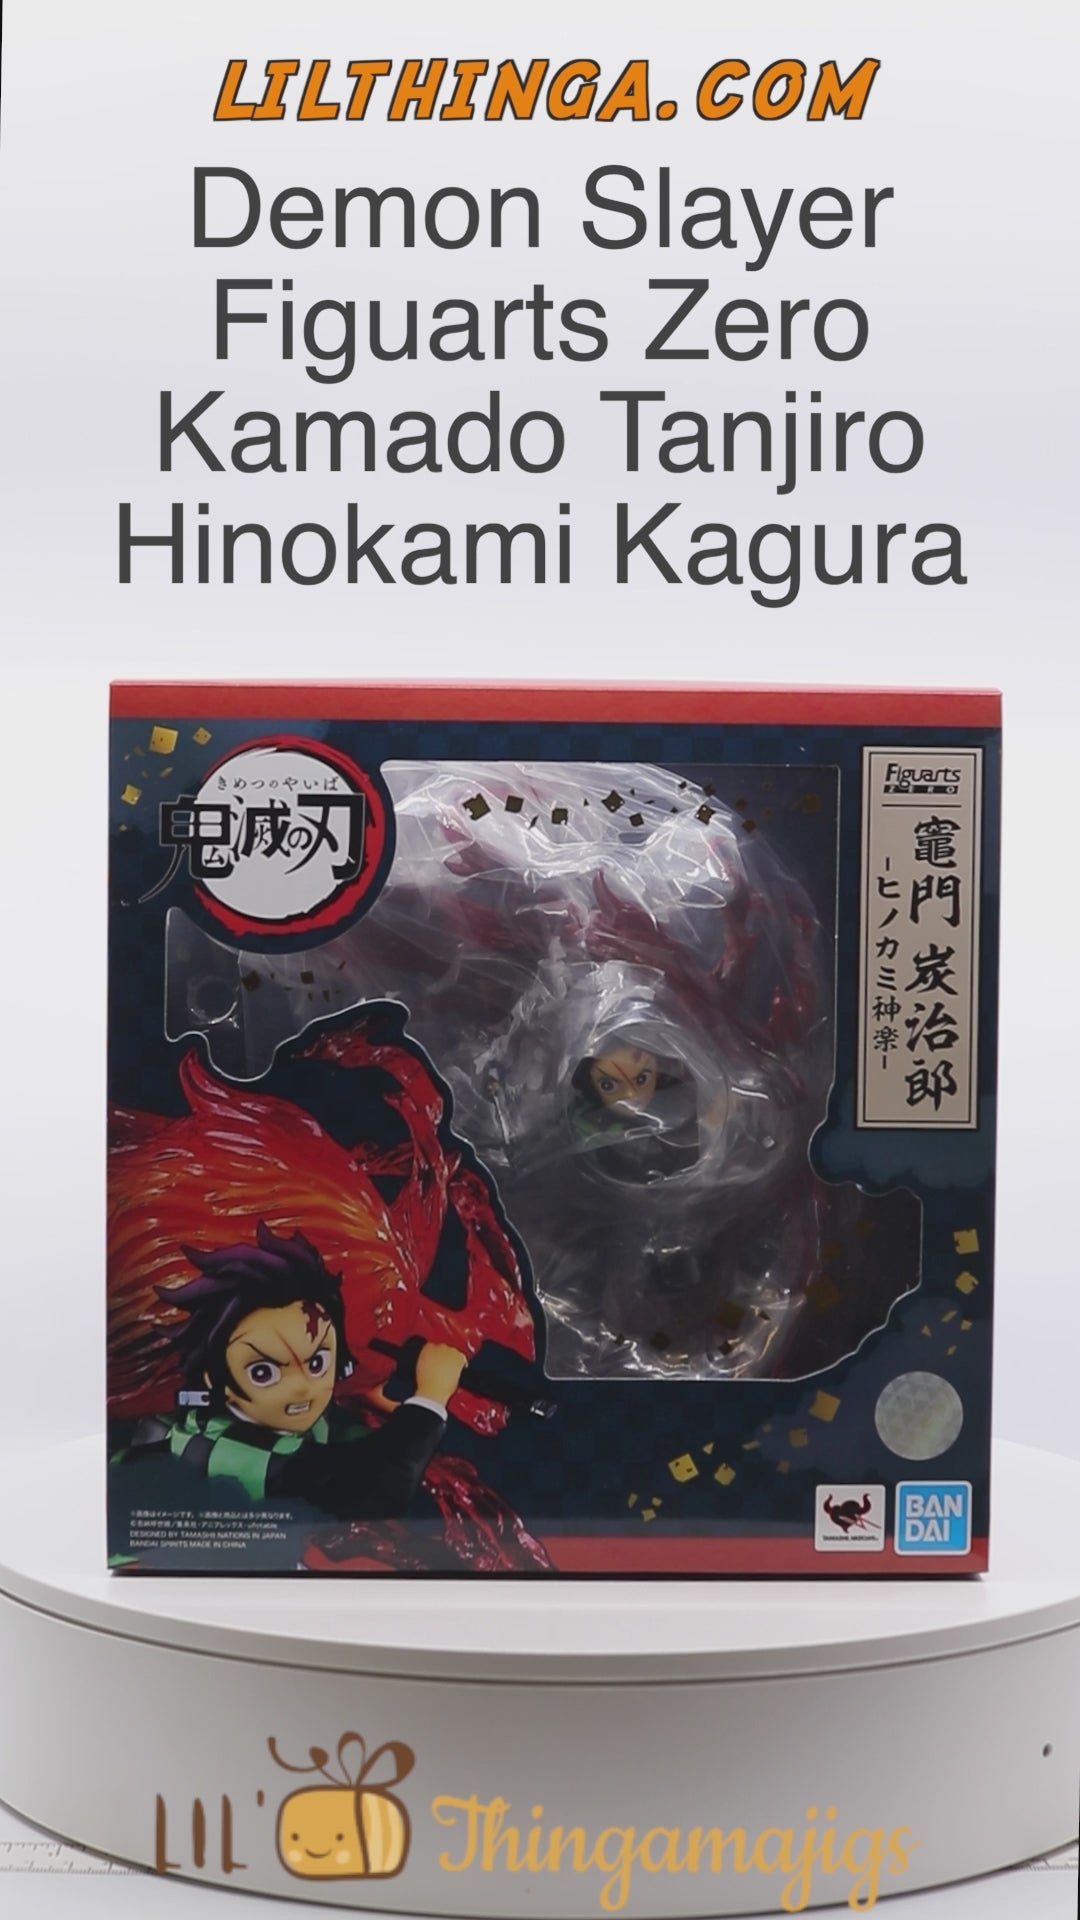 Tanjiro Kamado (Hinokami Kagura) - Demon Slayer - FiguartsZERO